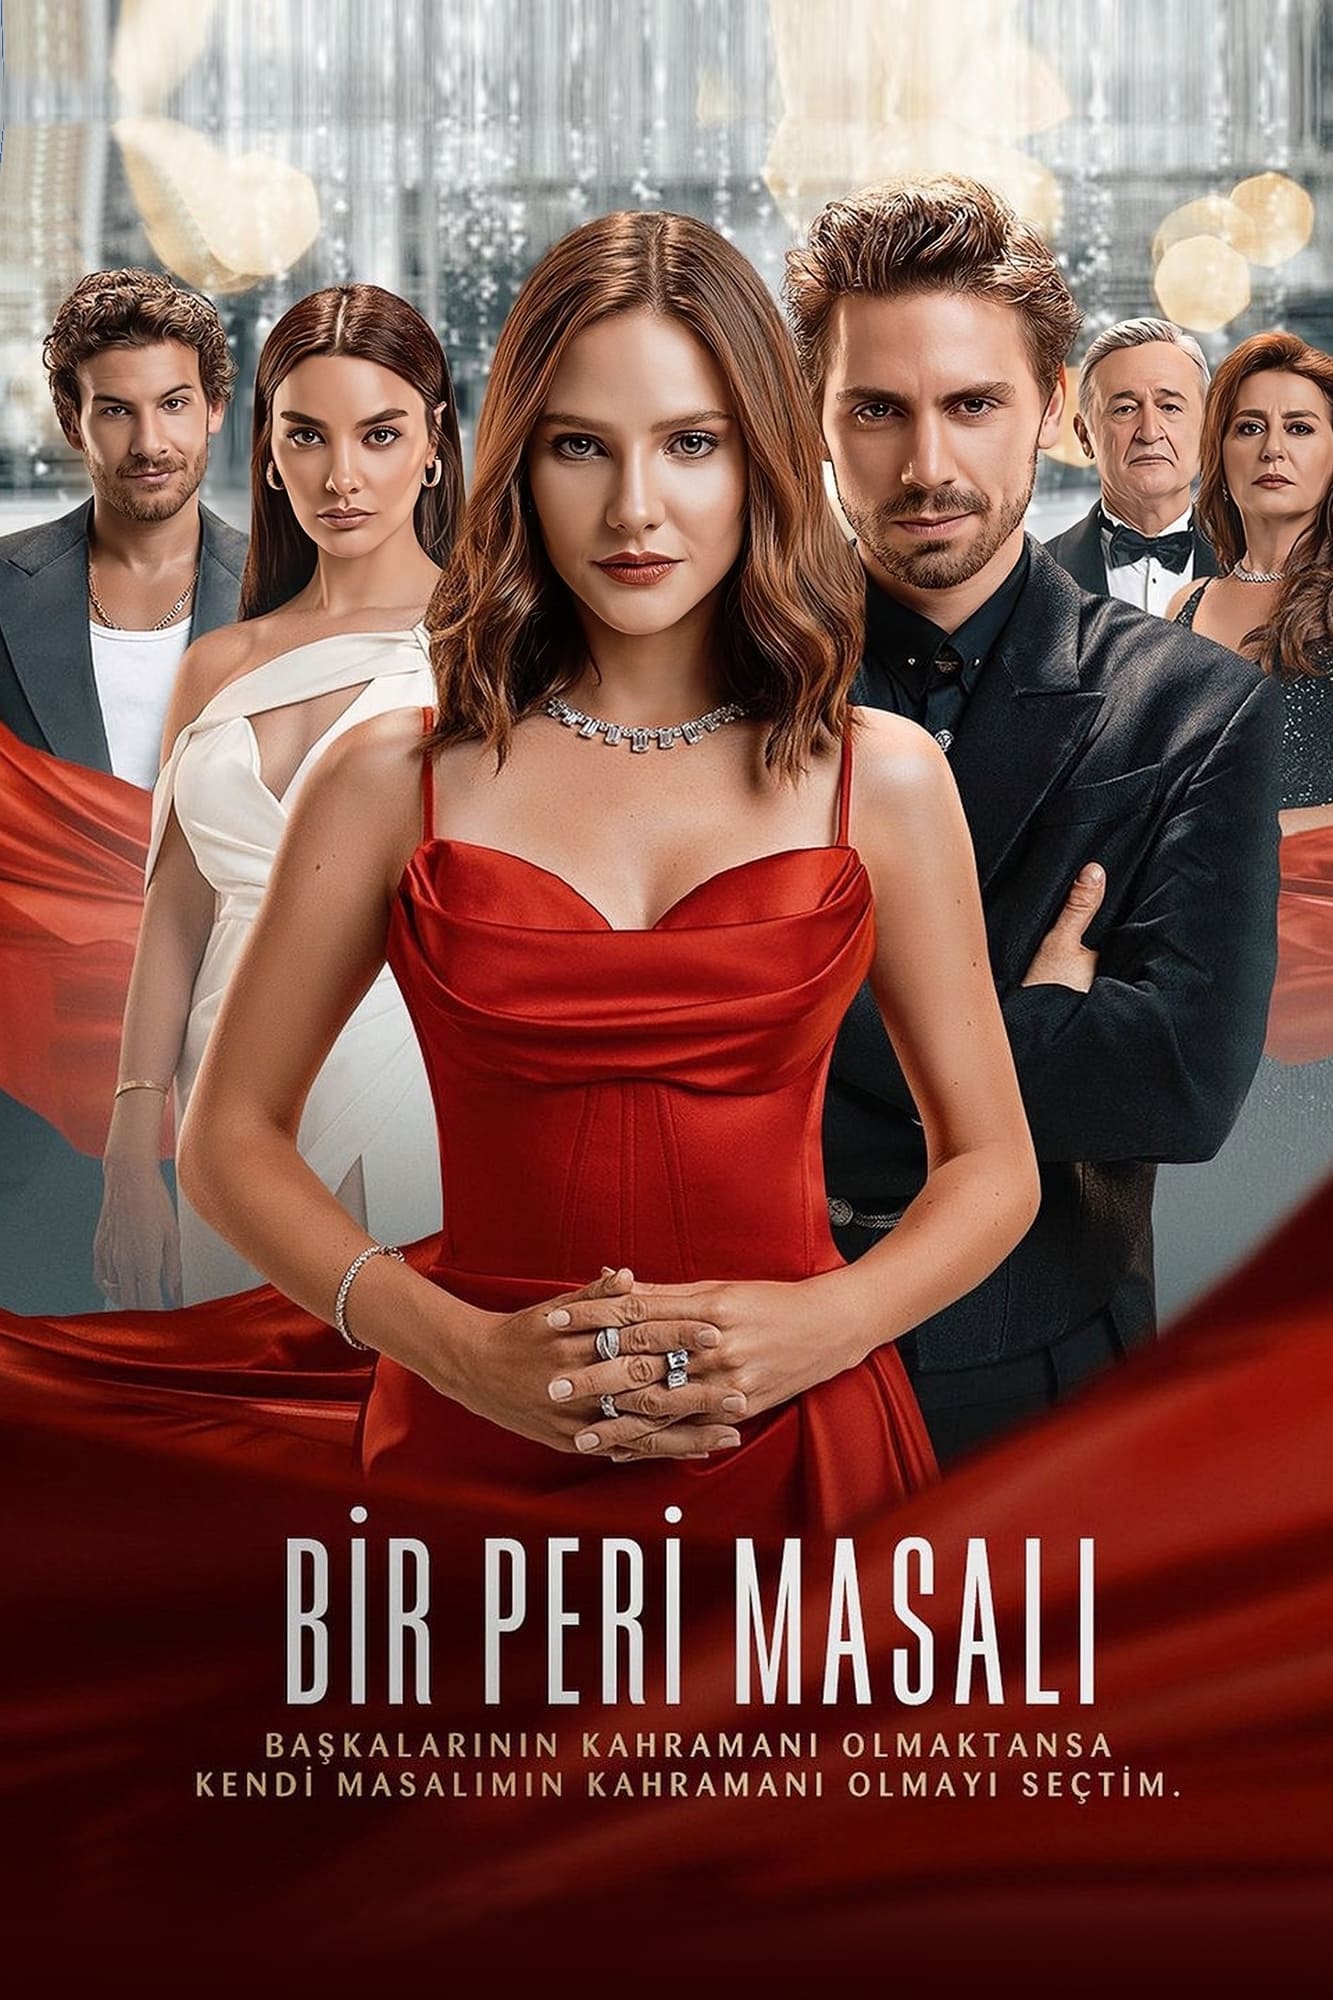 TV ratings for A Fairy Tale (Bir Peri Masalı) in Philippines. FOX TV series